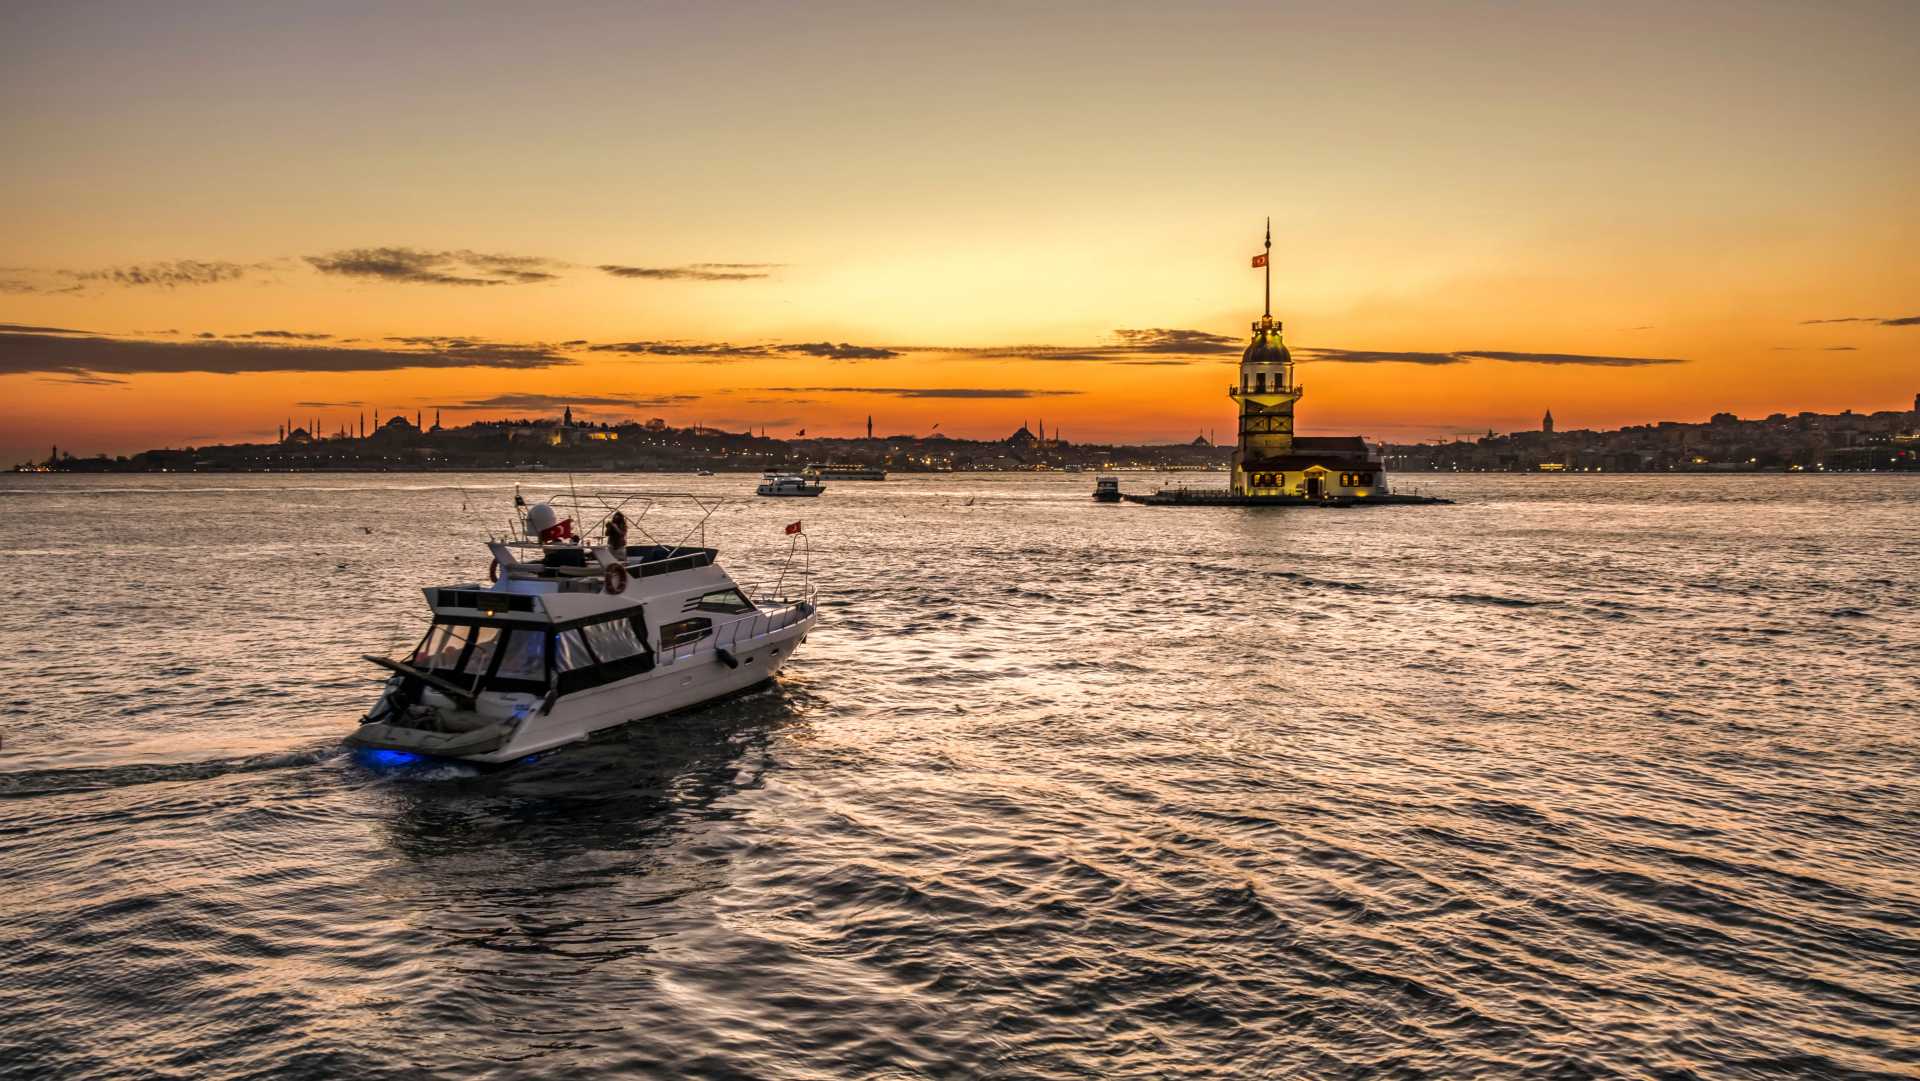 Bosphorus cruise during sunset